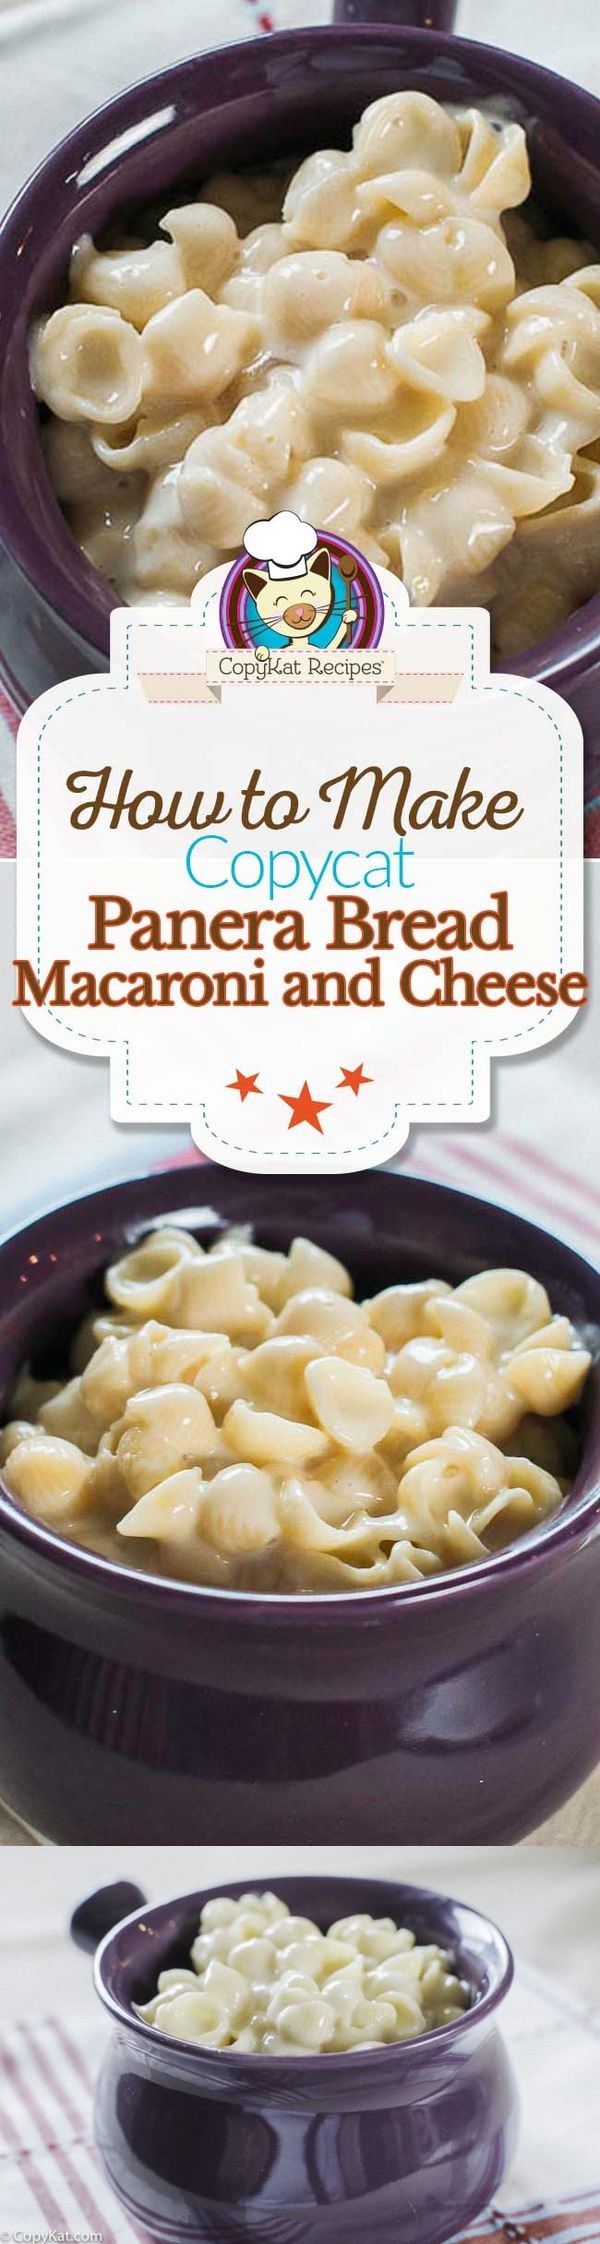 Panera Bread Macaroni and Cheese